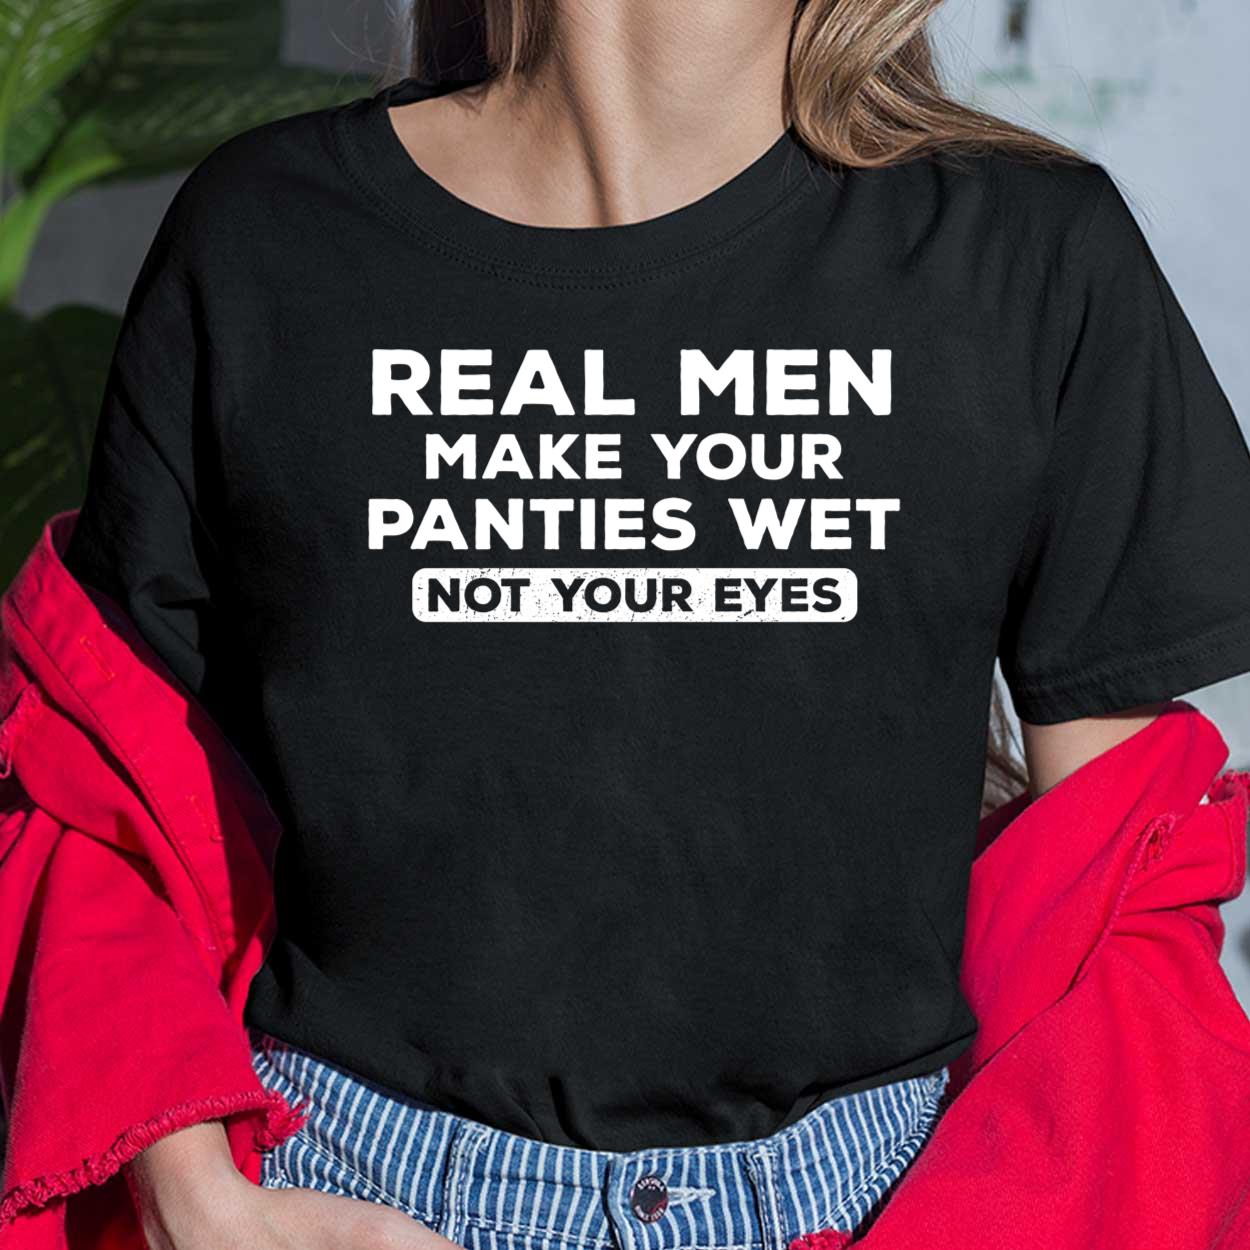 REAL MEN MAKE YOUR PANTIES WET Men's T-Shirt